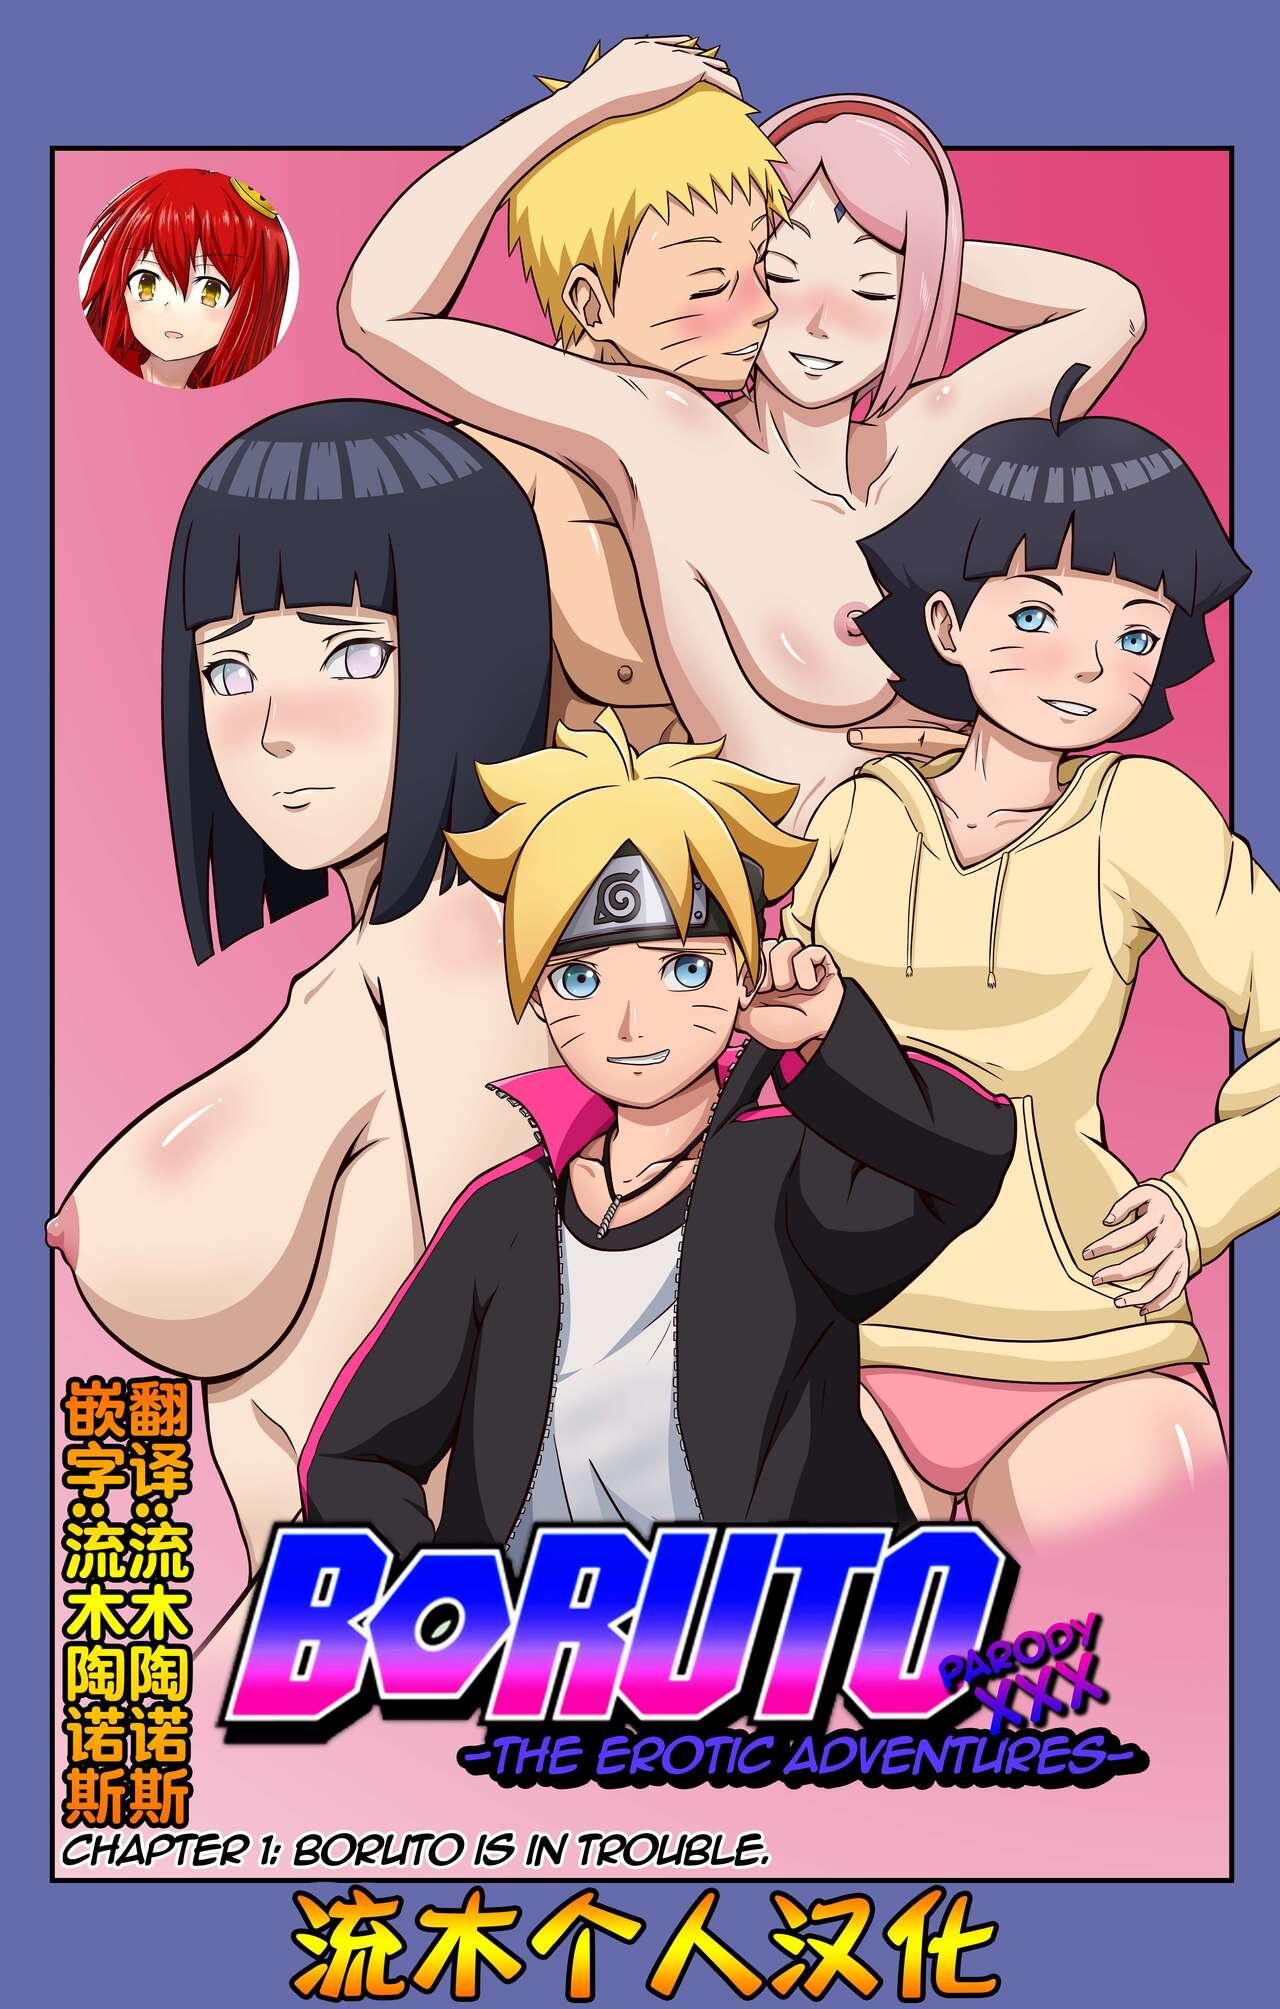 Boruto Erotic Adventure chapter1:Boruto is in trouble 0